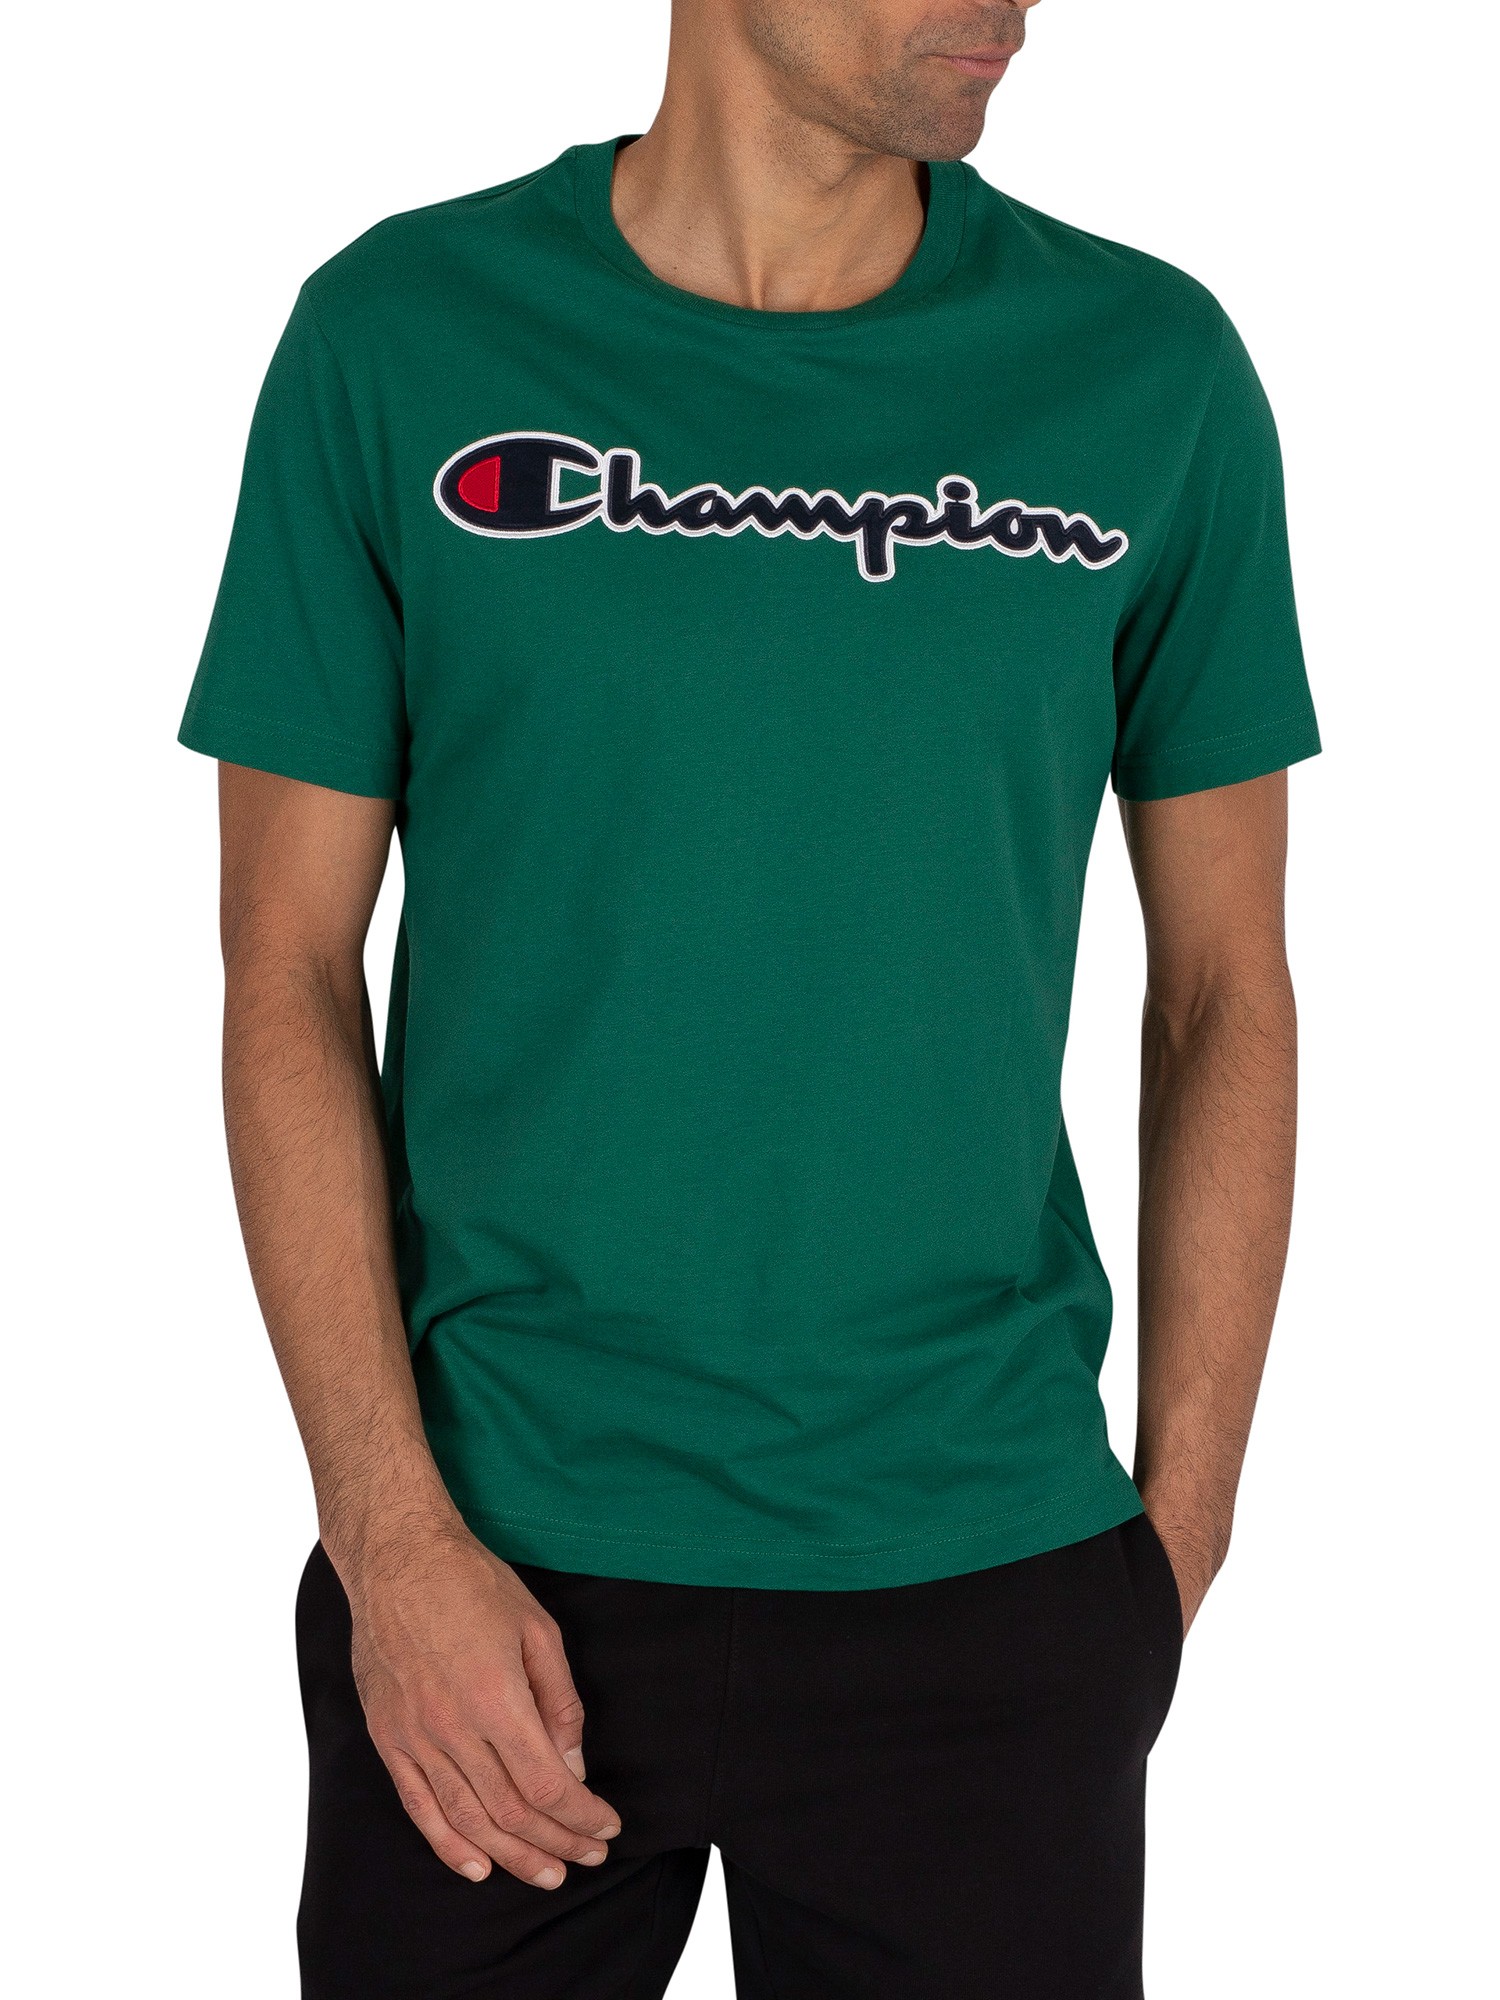 champion shirt green